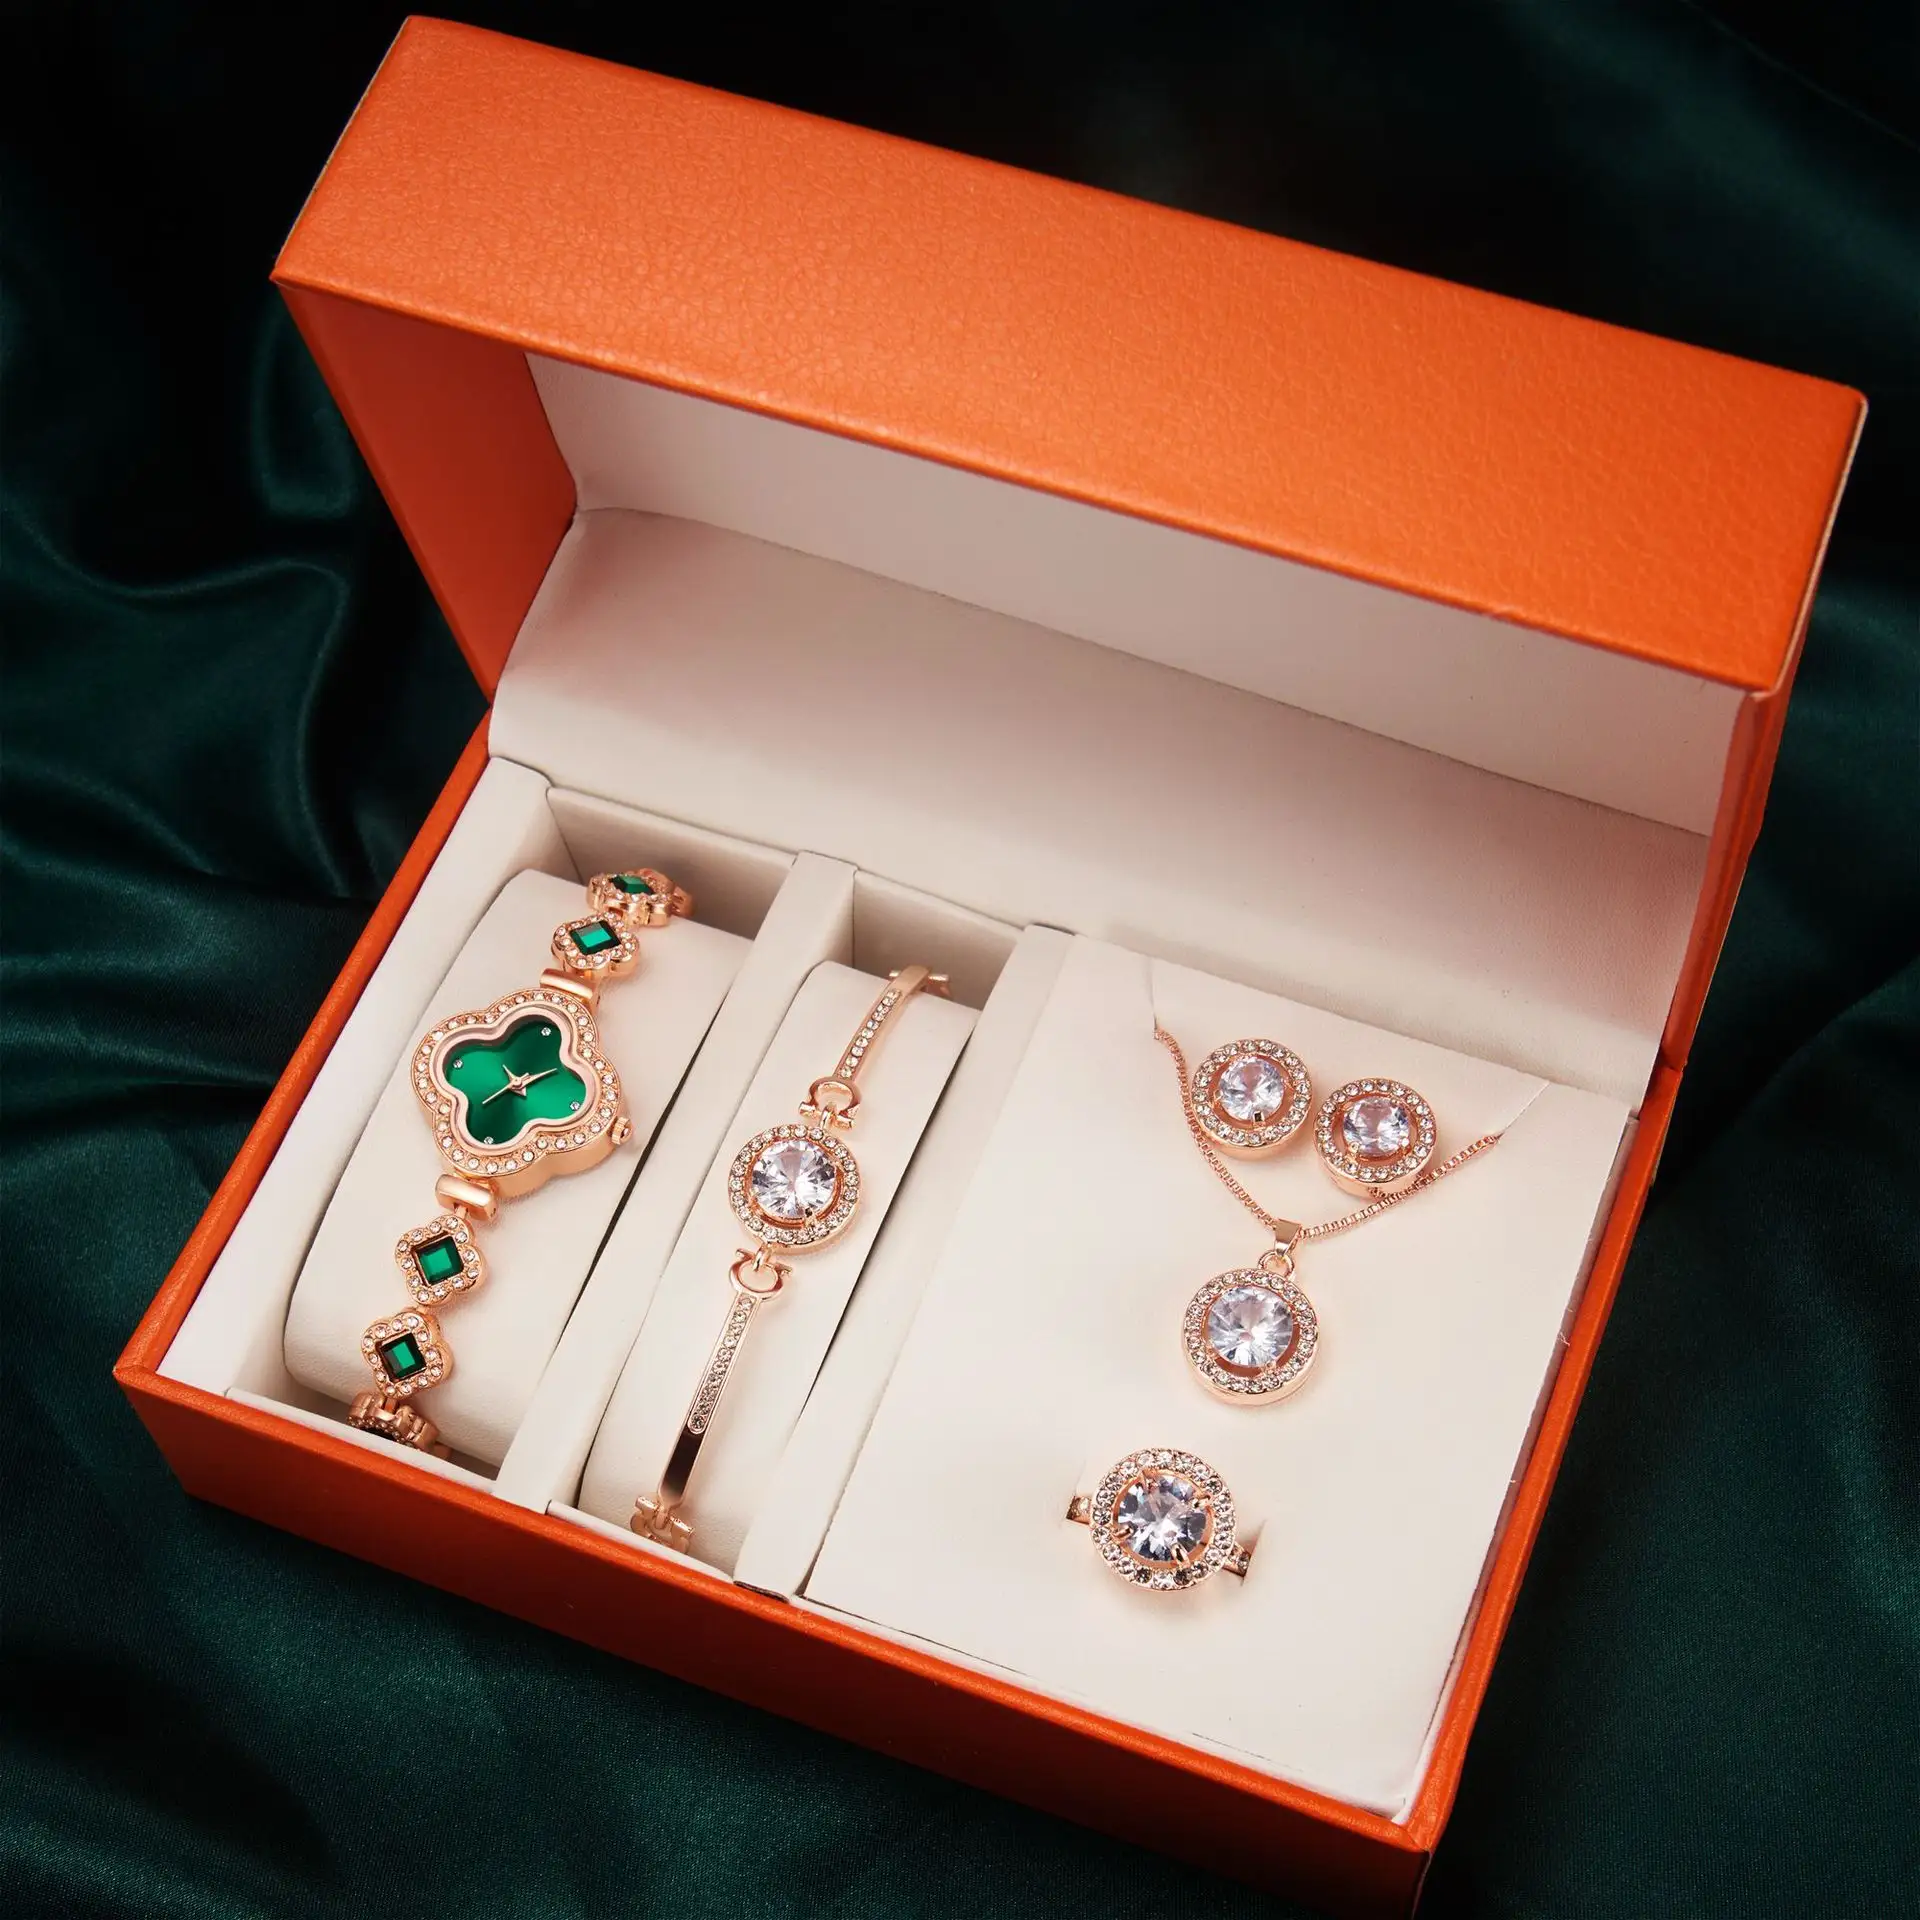 Female watches Jewelry sets Luxury Quartz Wrist Watch 5pcs Sets With Box Colorful Ladies rhinestone Watch Gift Set